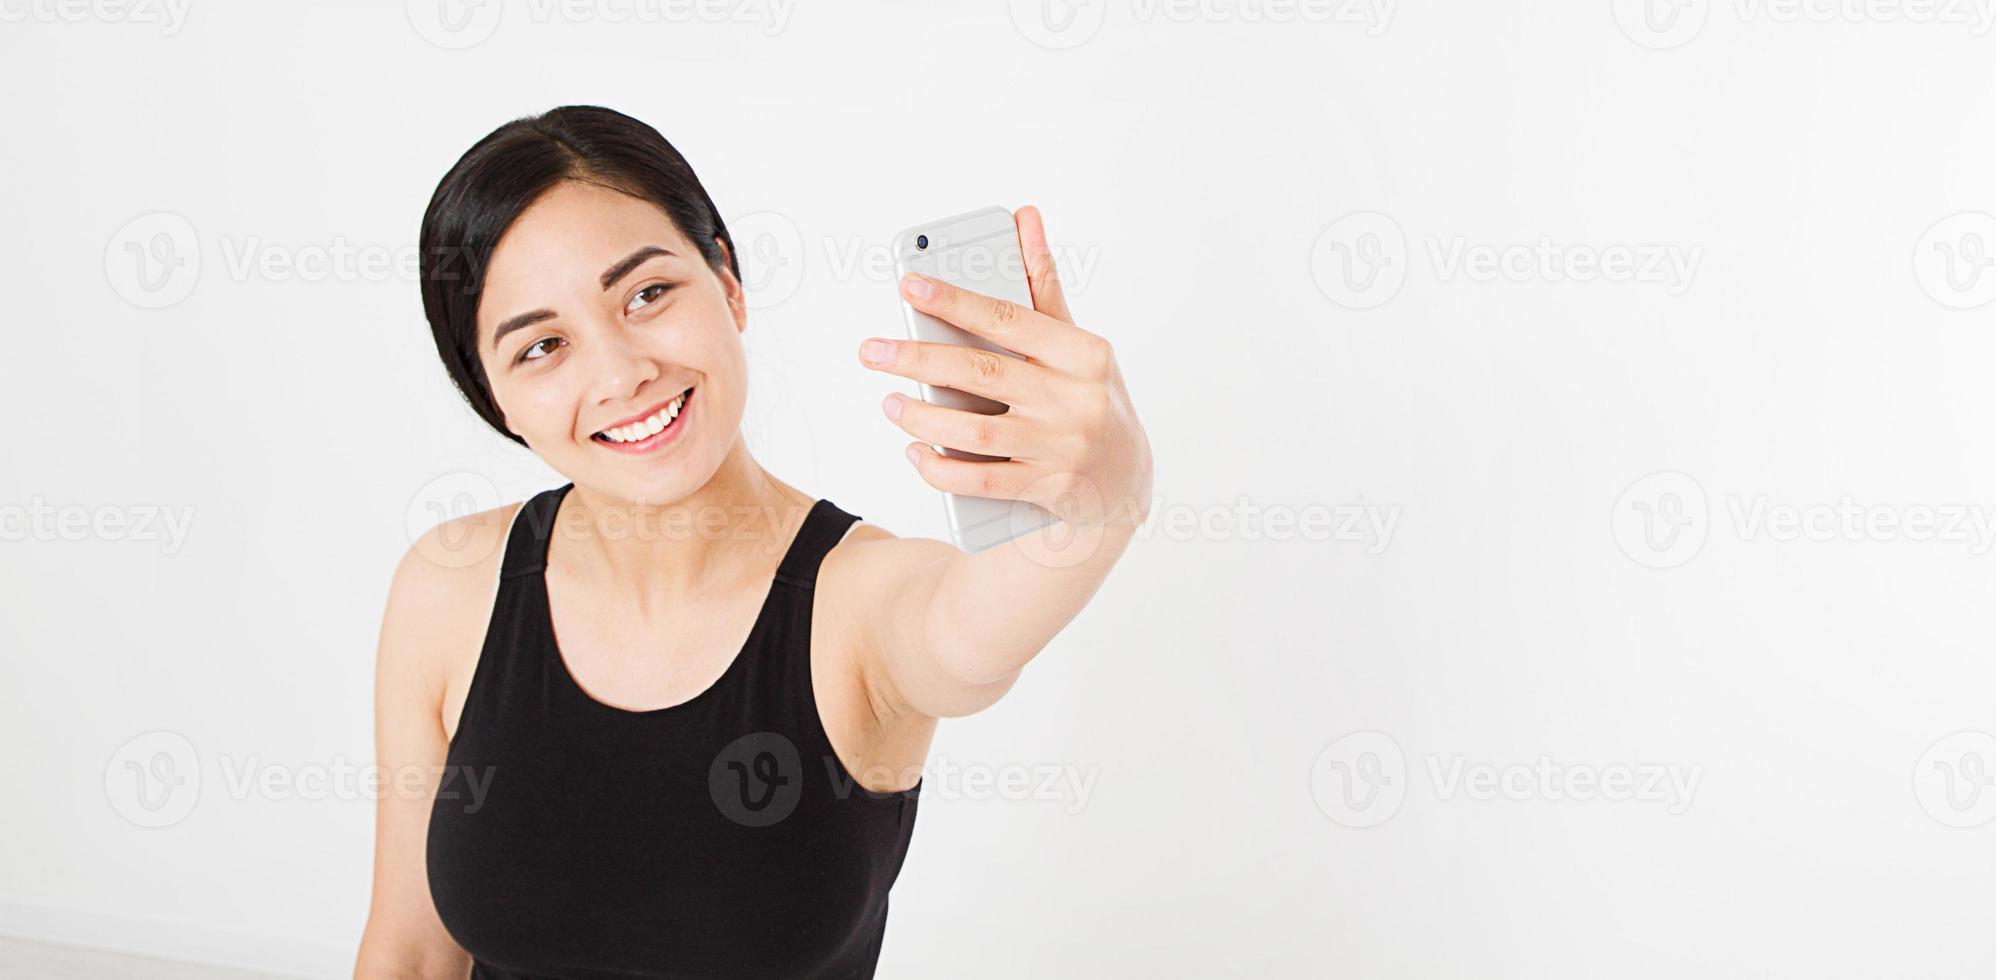 moderna, sexy asiática, mujer coreana tomando un selfie aislado sobre fondo blanco, espacio de copia, maqueta foto